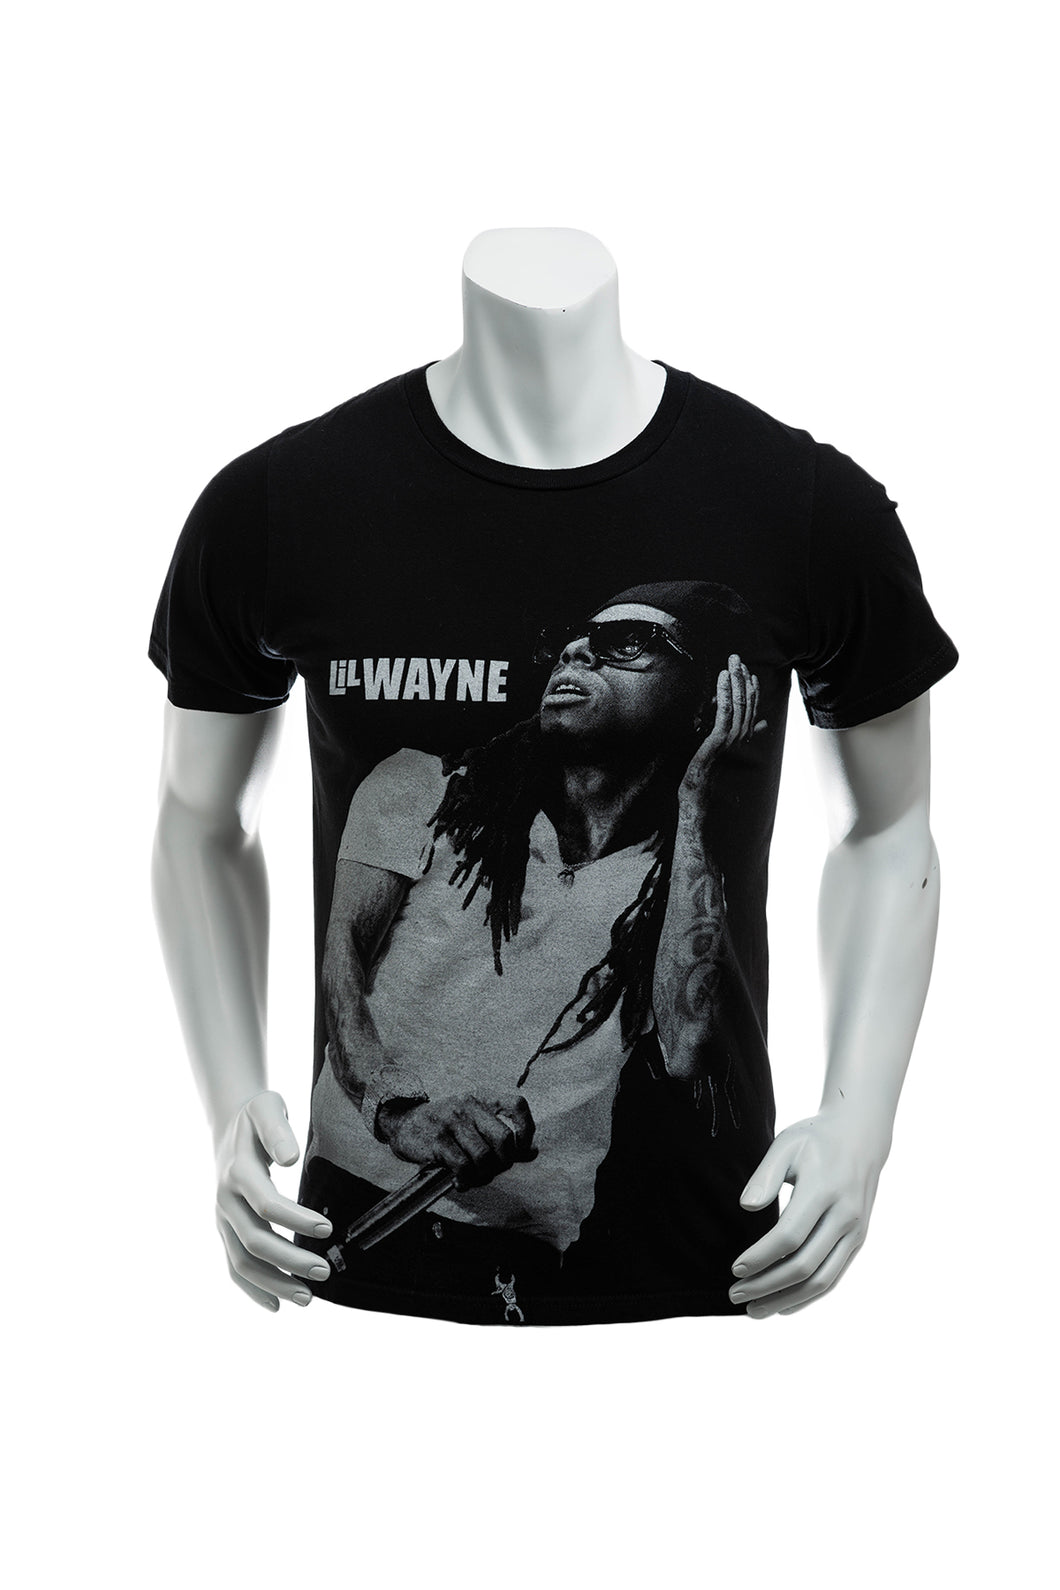 Lil Wayne T-Shirt Men's Small